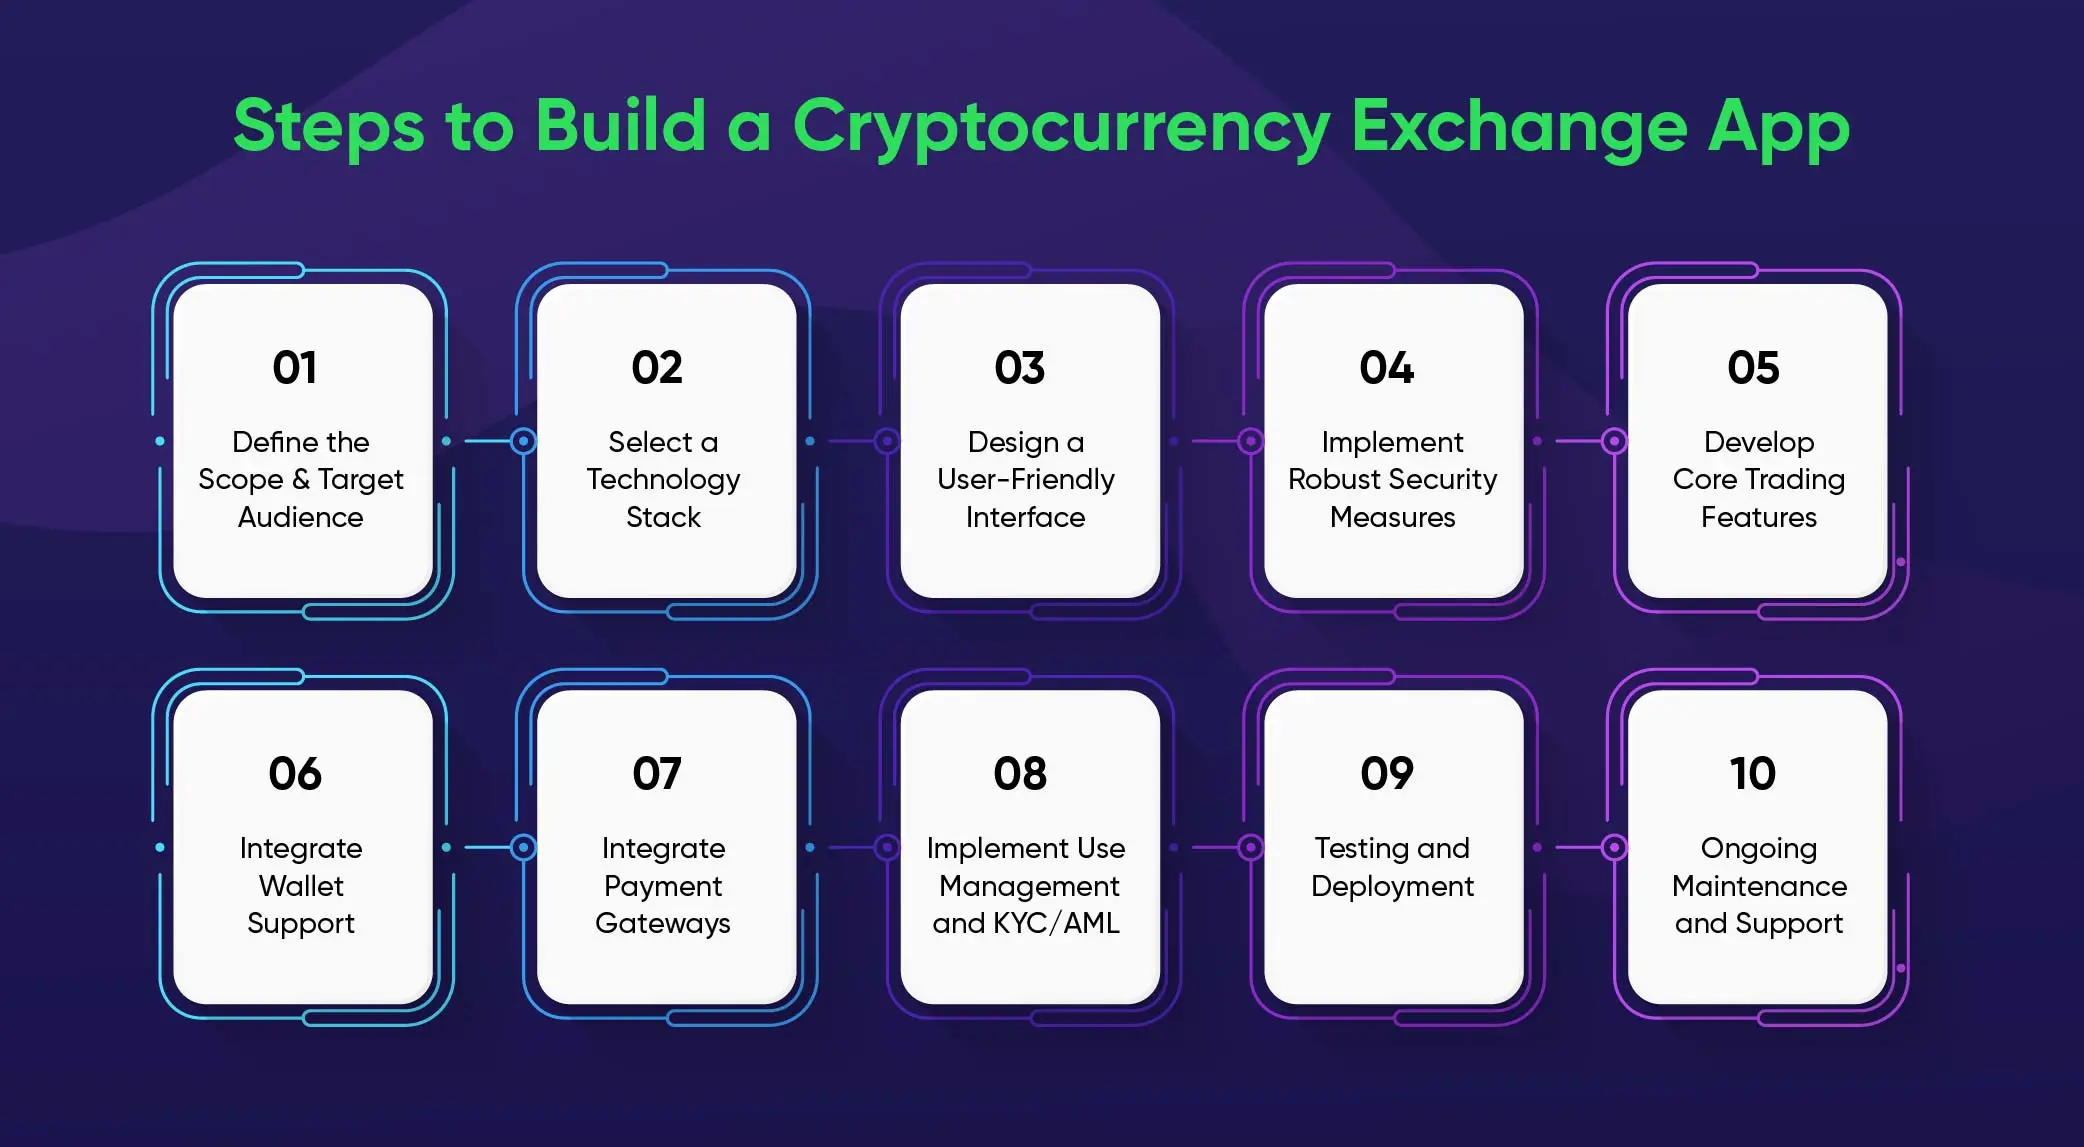 Cryptocurrency exchange app